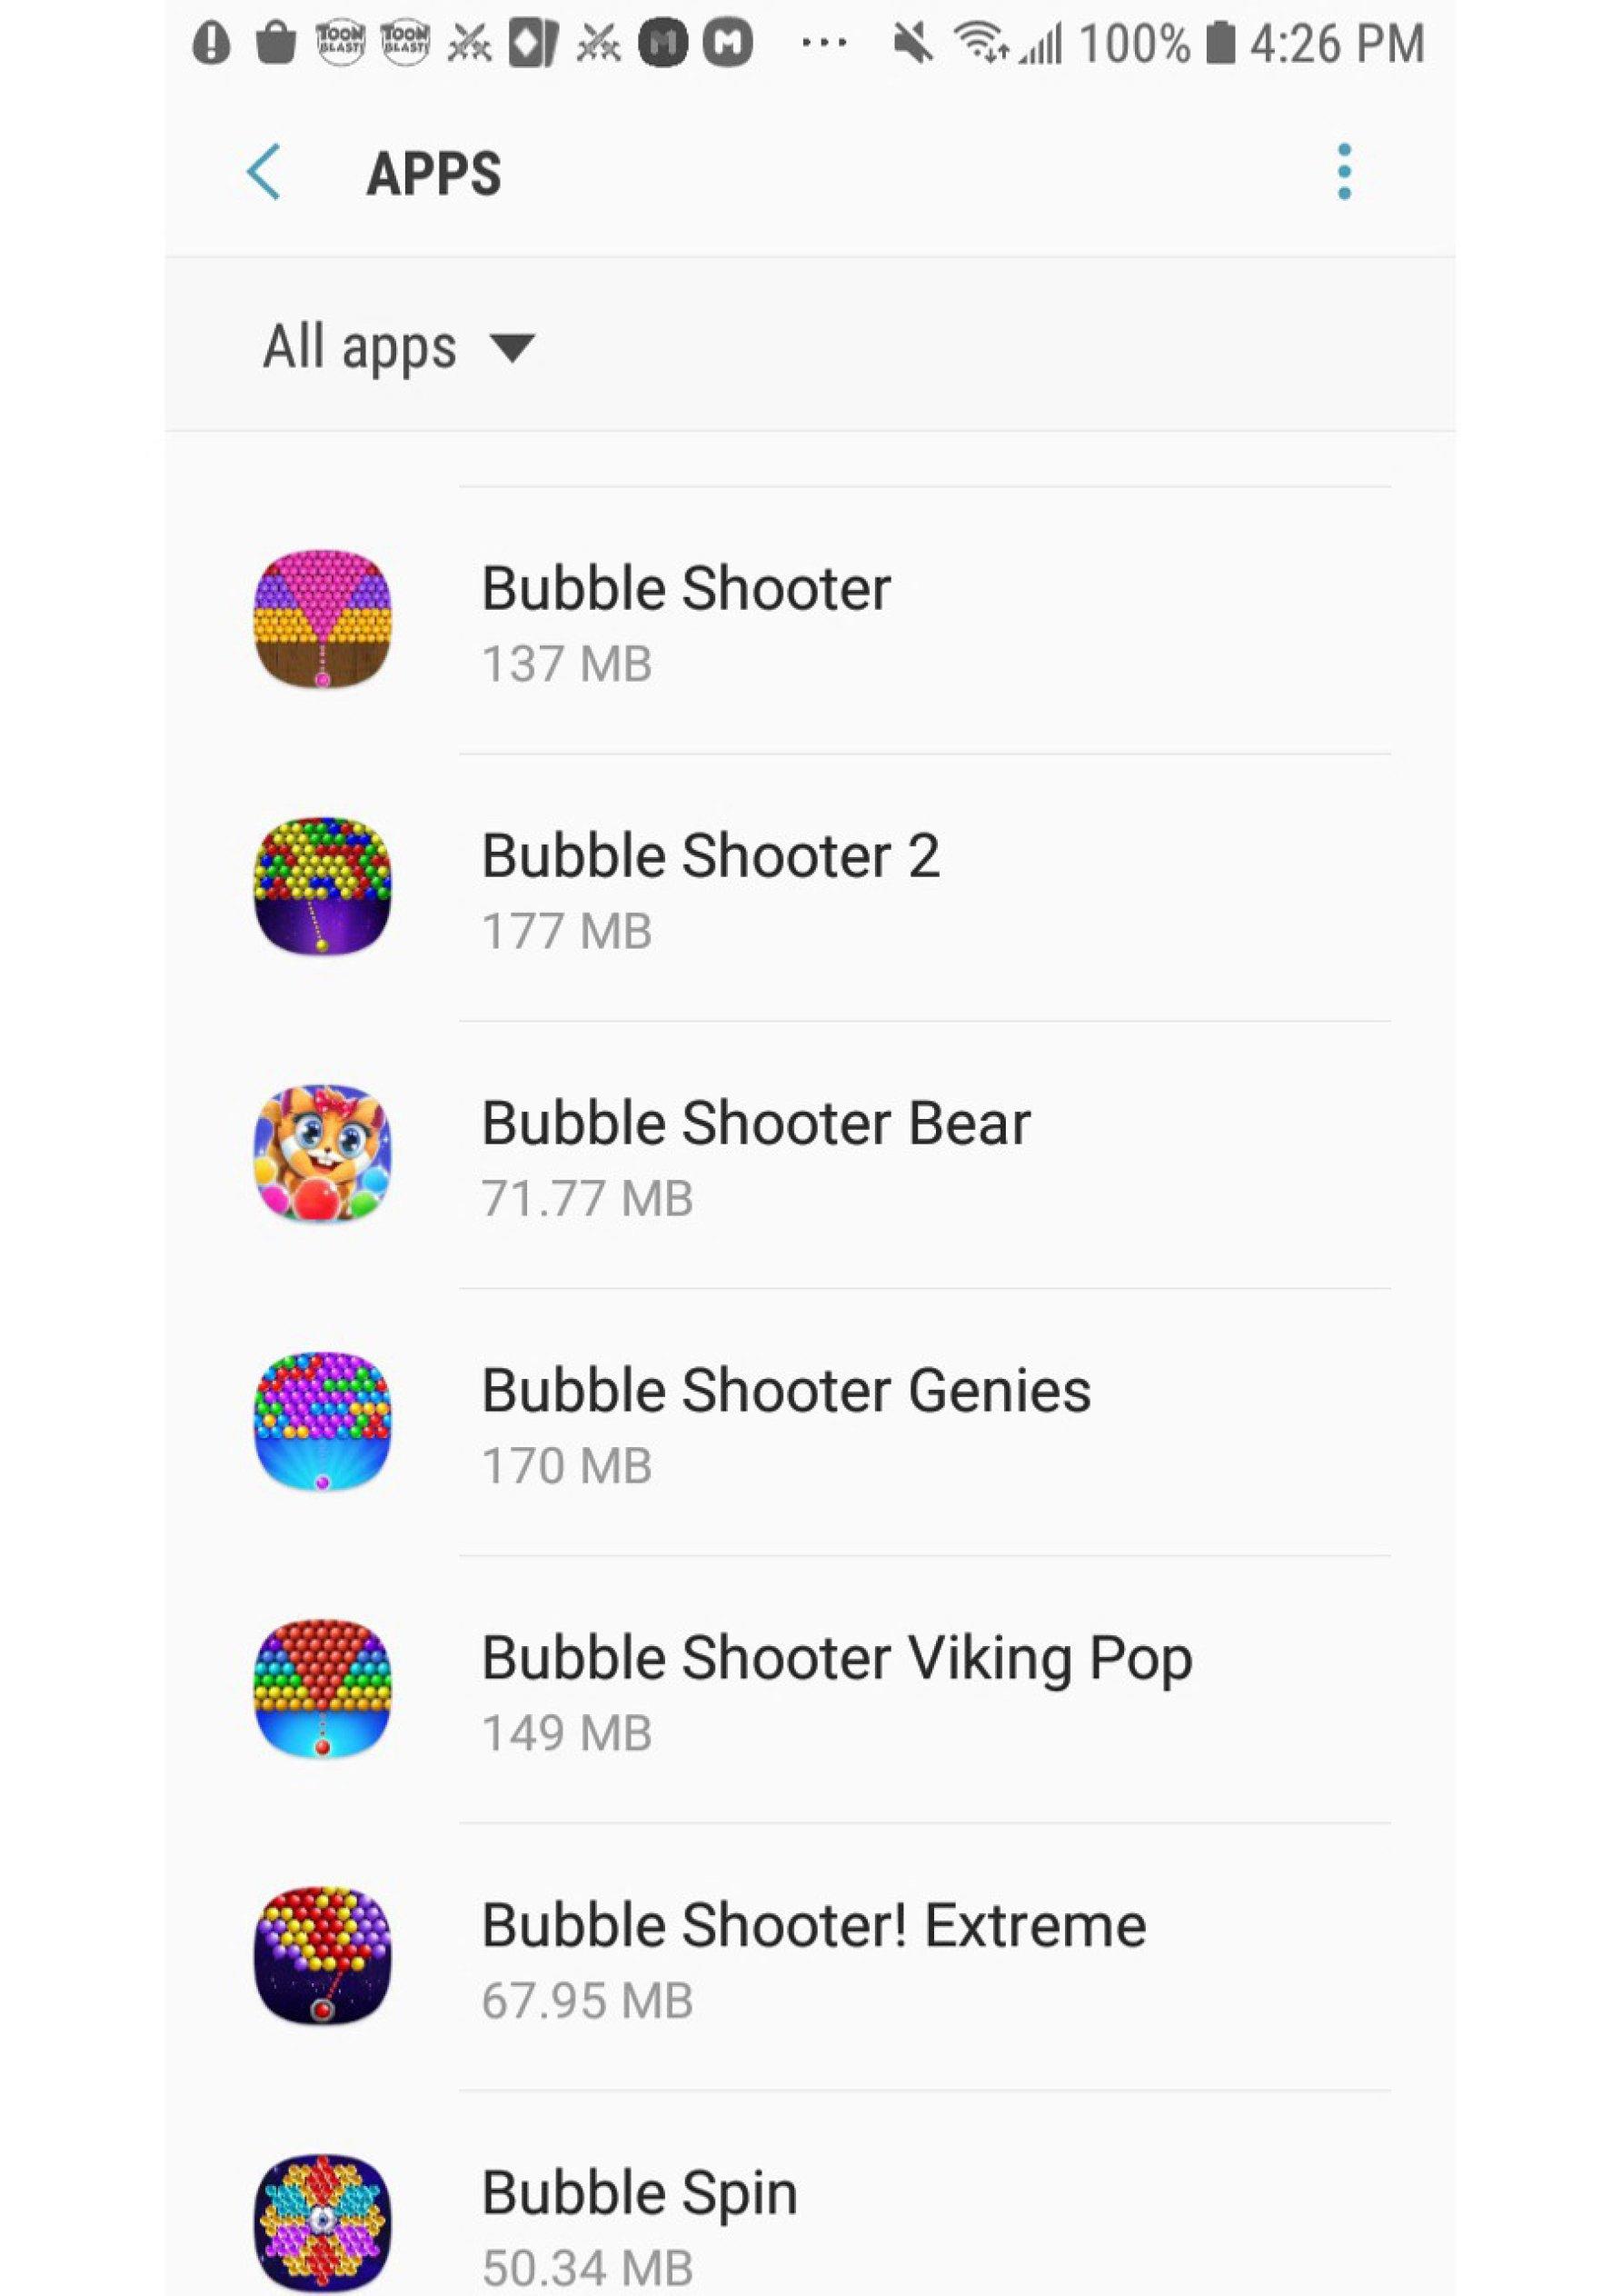 Get Bubble Shooter Viking Pop!